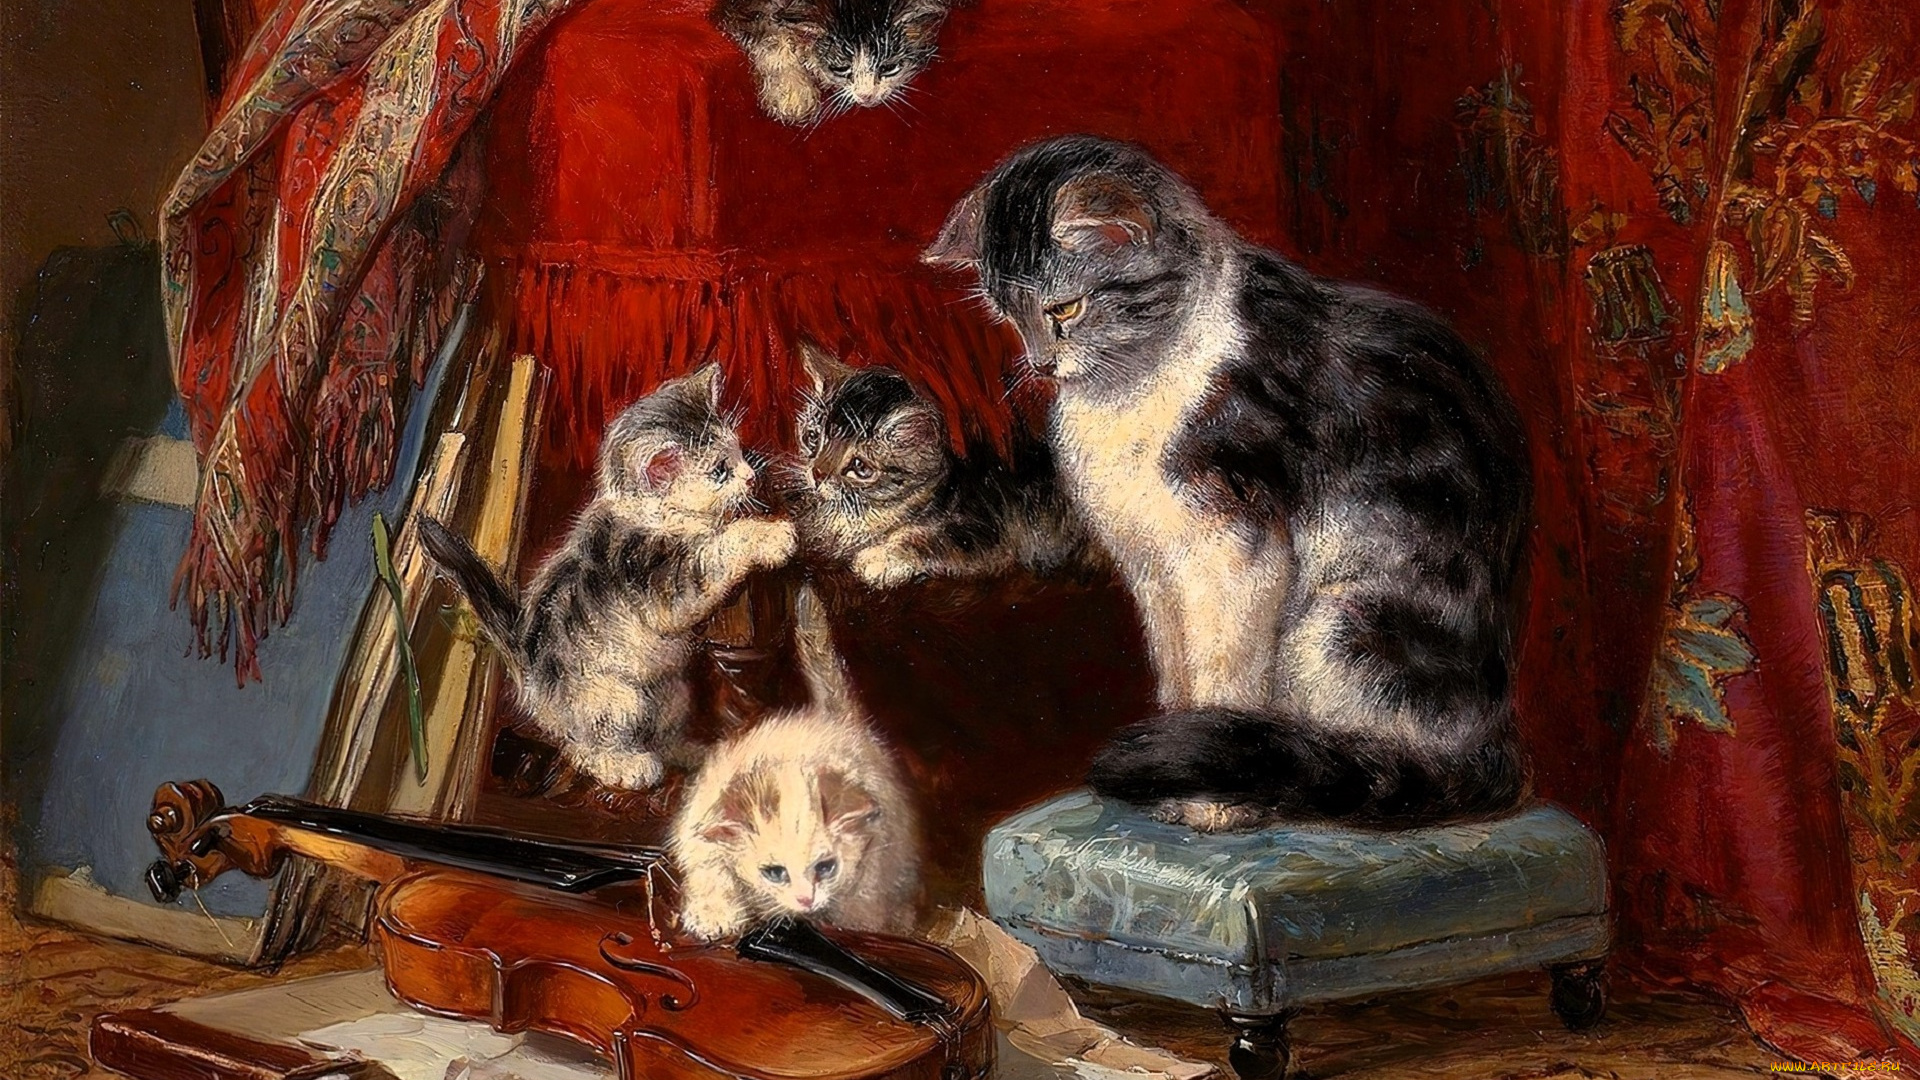 рисованное, henriette, ronner-knip, кошка, котята, скрипка, пуфик